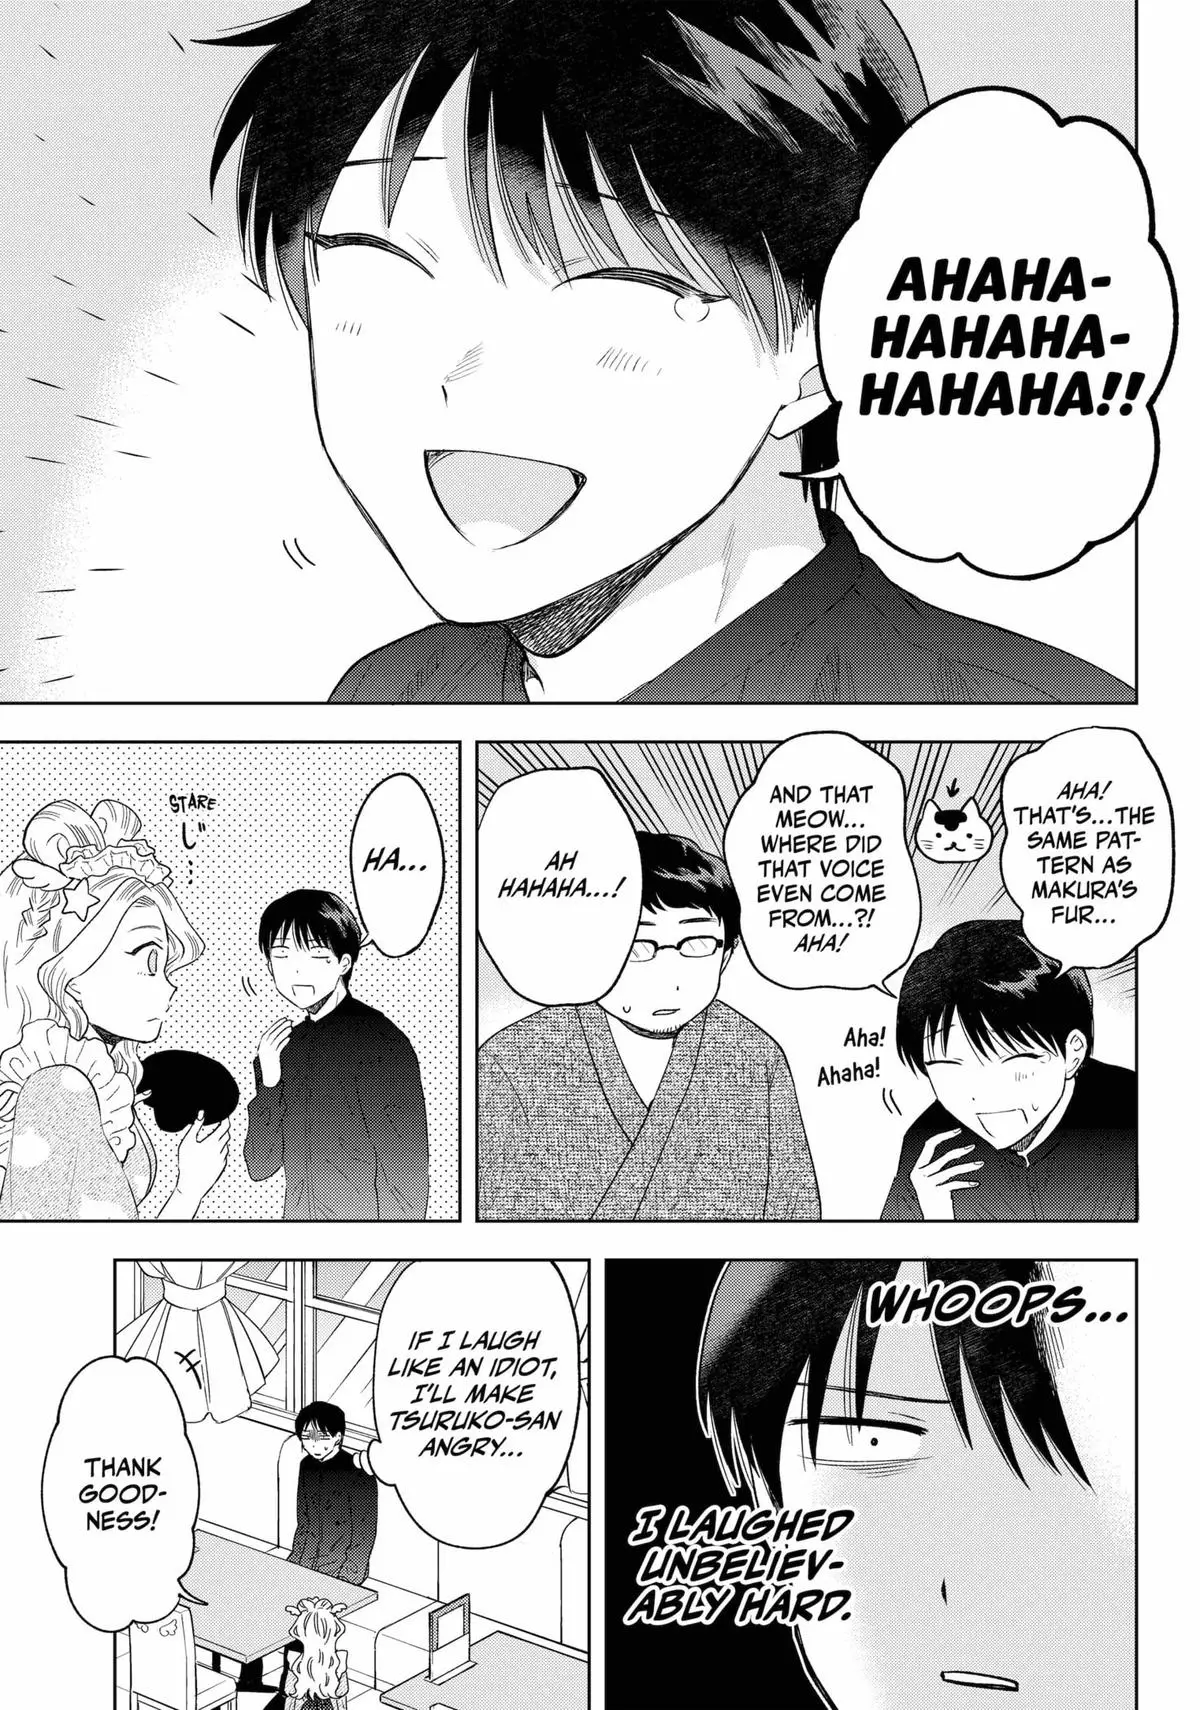 Tsuruko Returns The Favor - 14 page 17-9039d69b